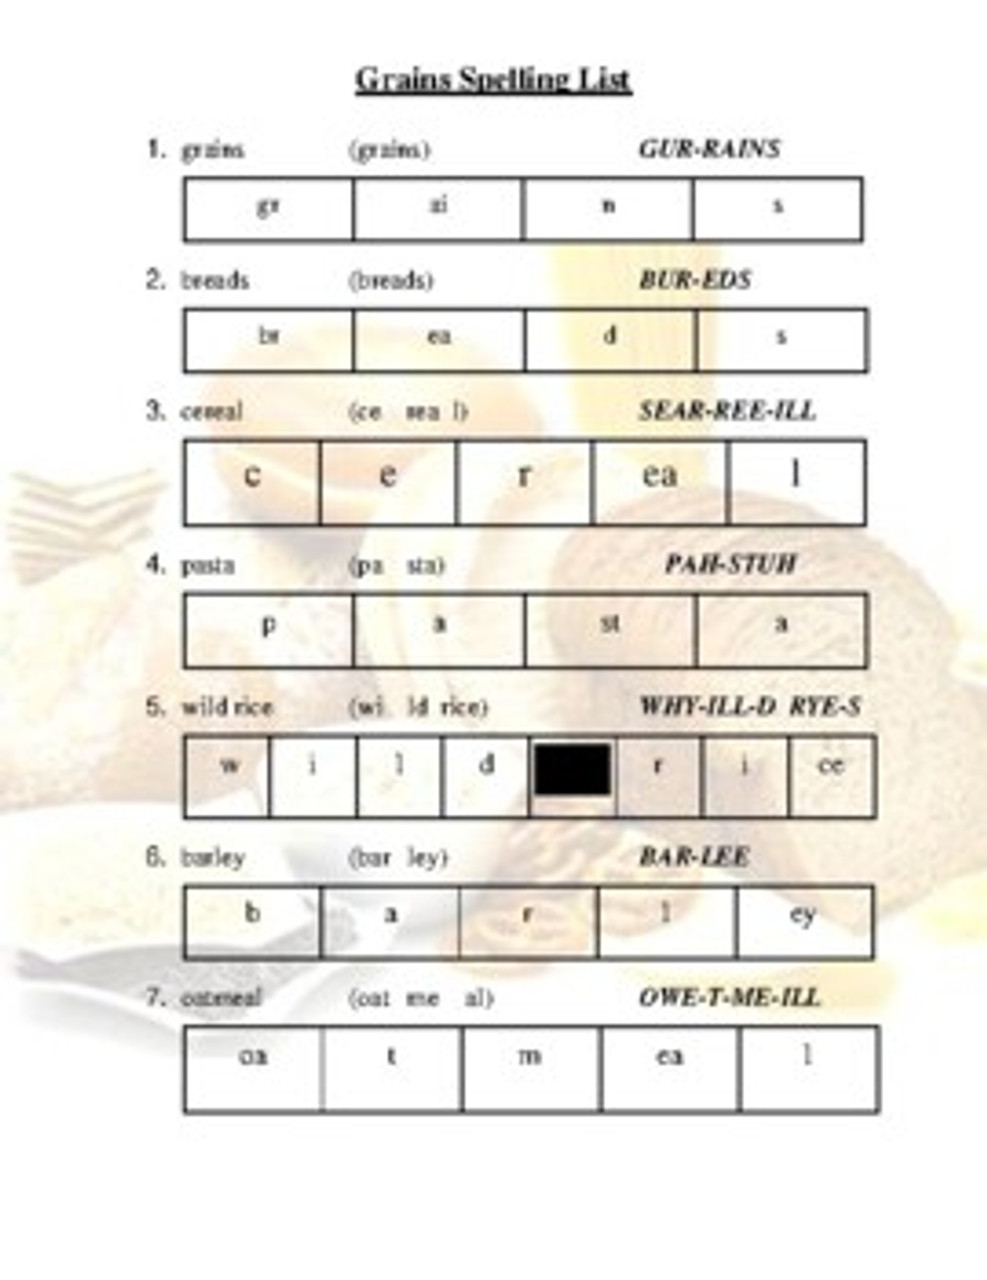 Food Pyramid Spelling List (Grades 2-4)